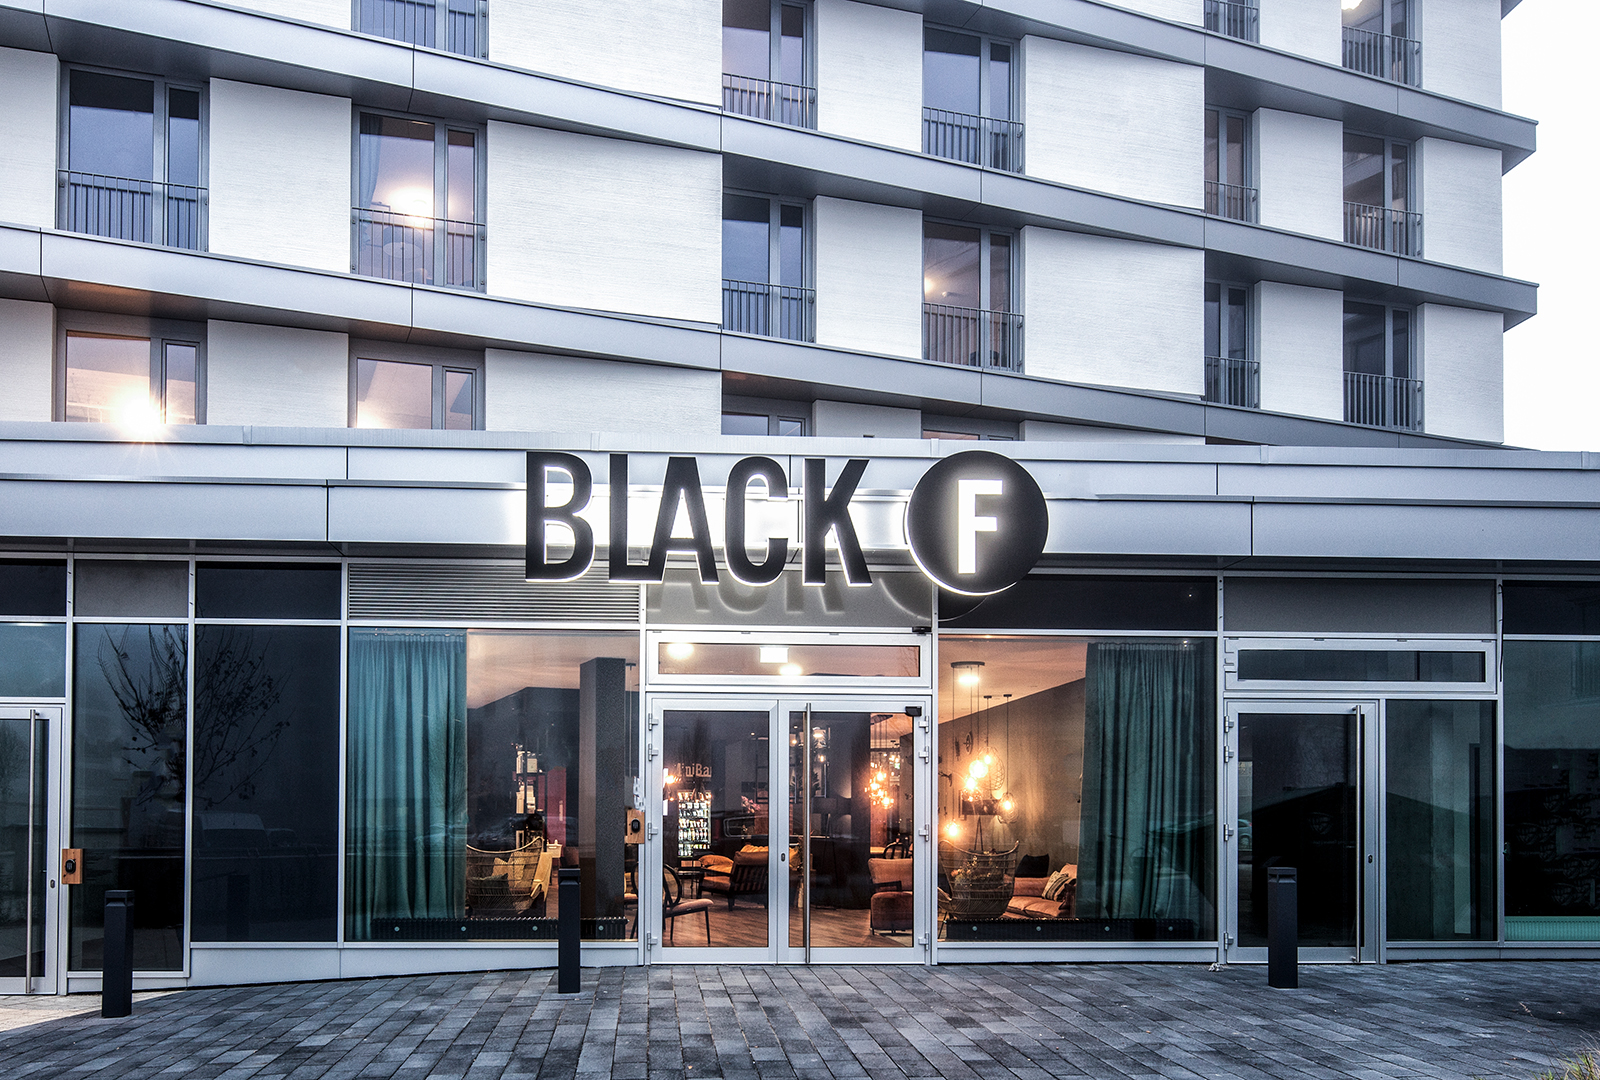 The Black F boarding house in Freiburg: stylish short-term accommodations